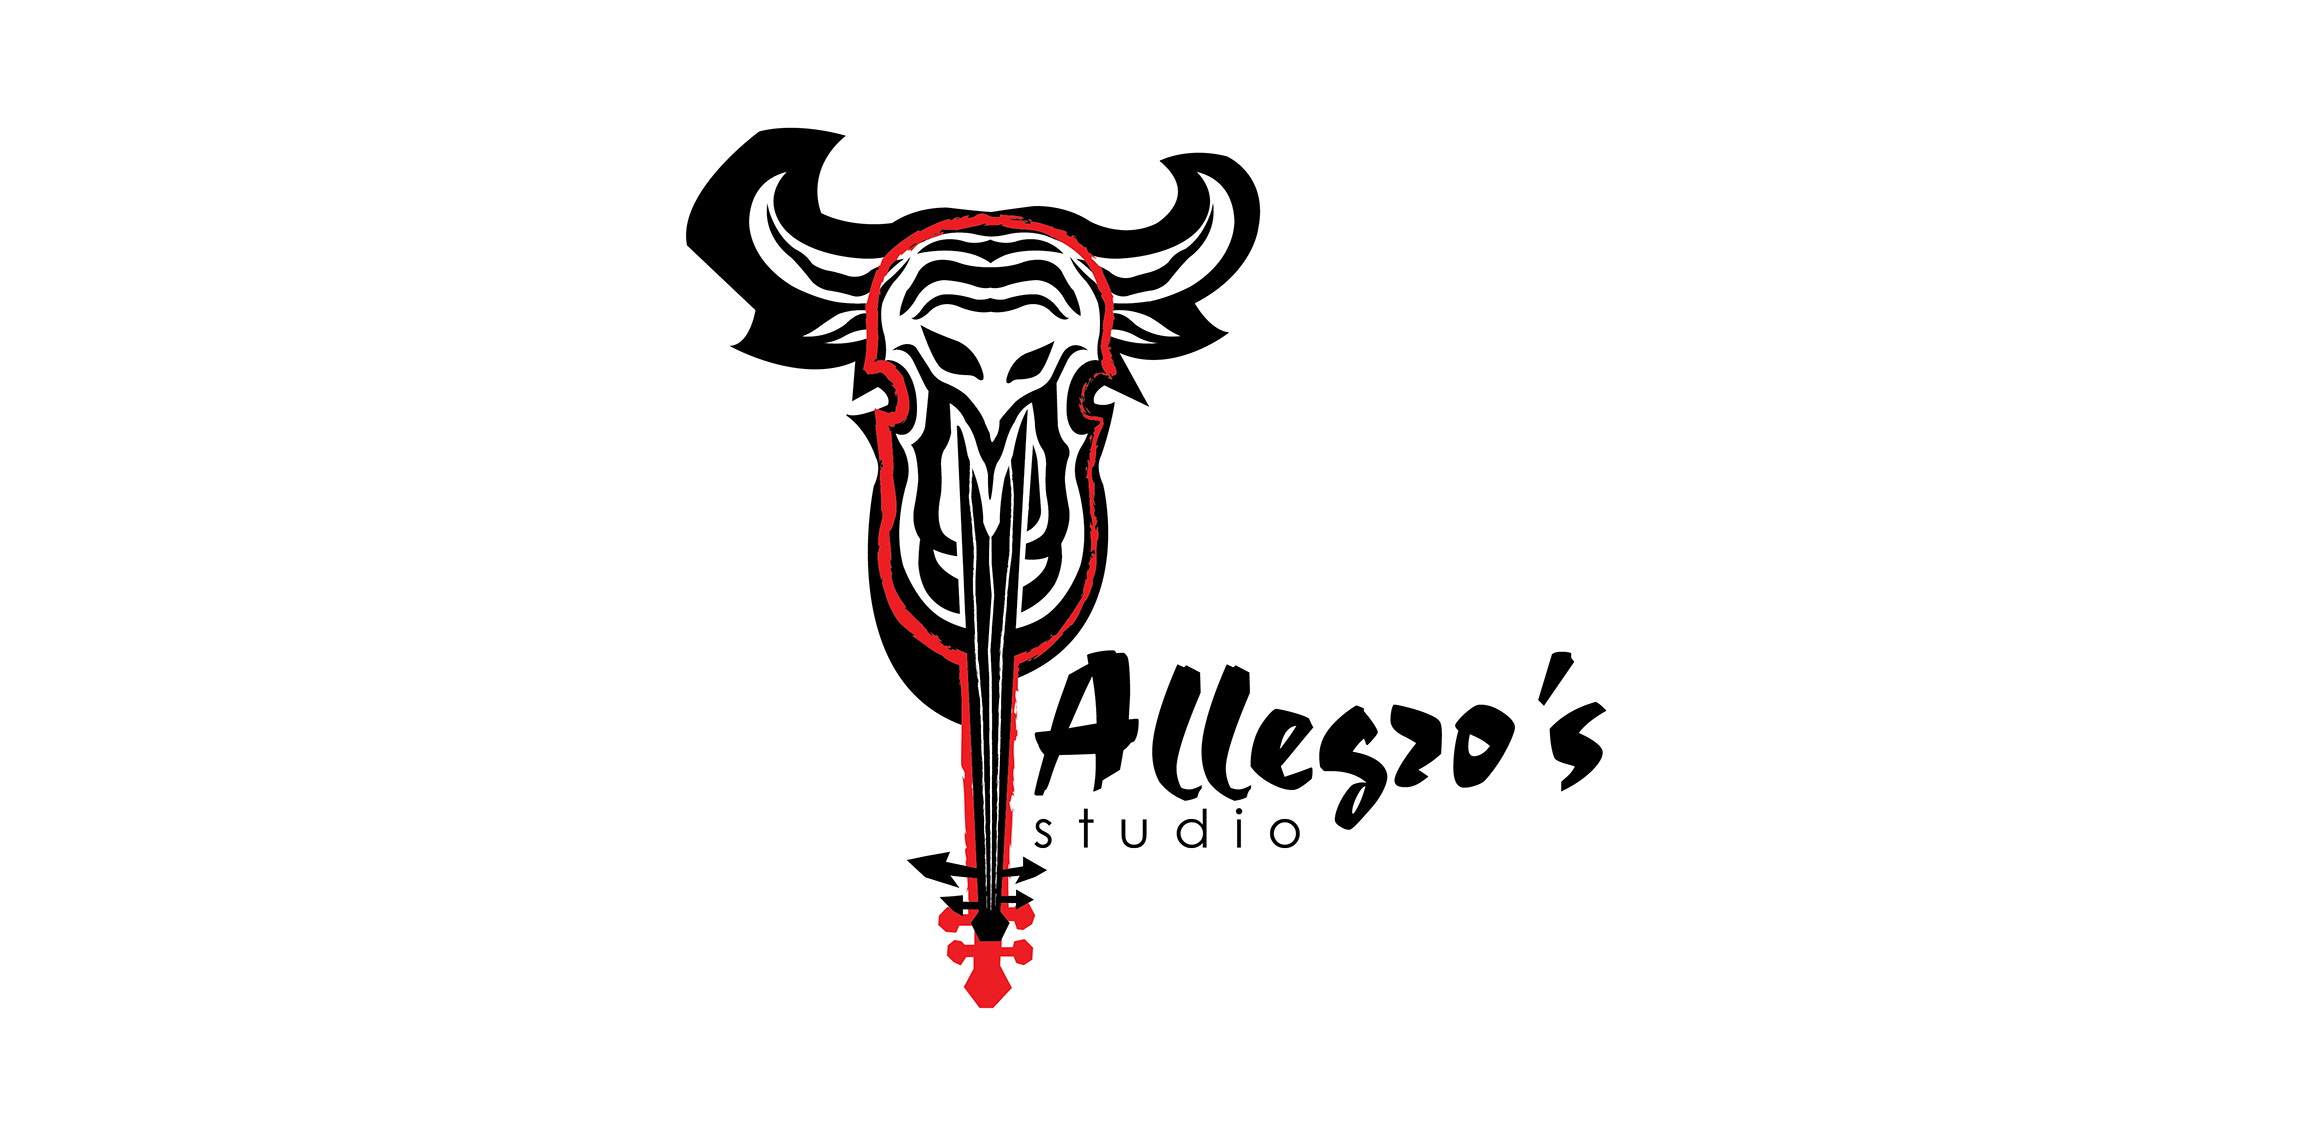 Allegro’s Studio